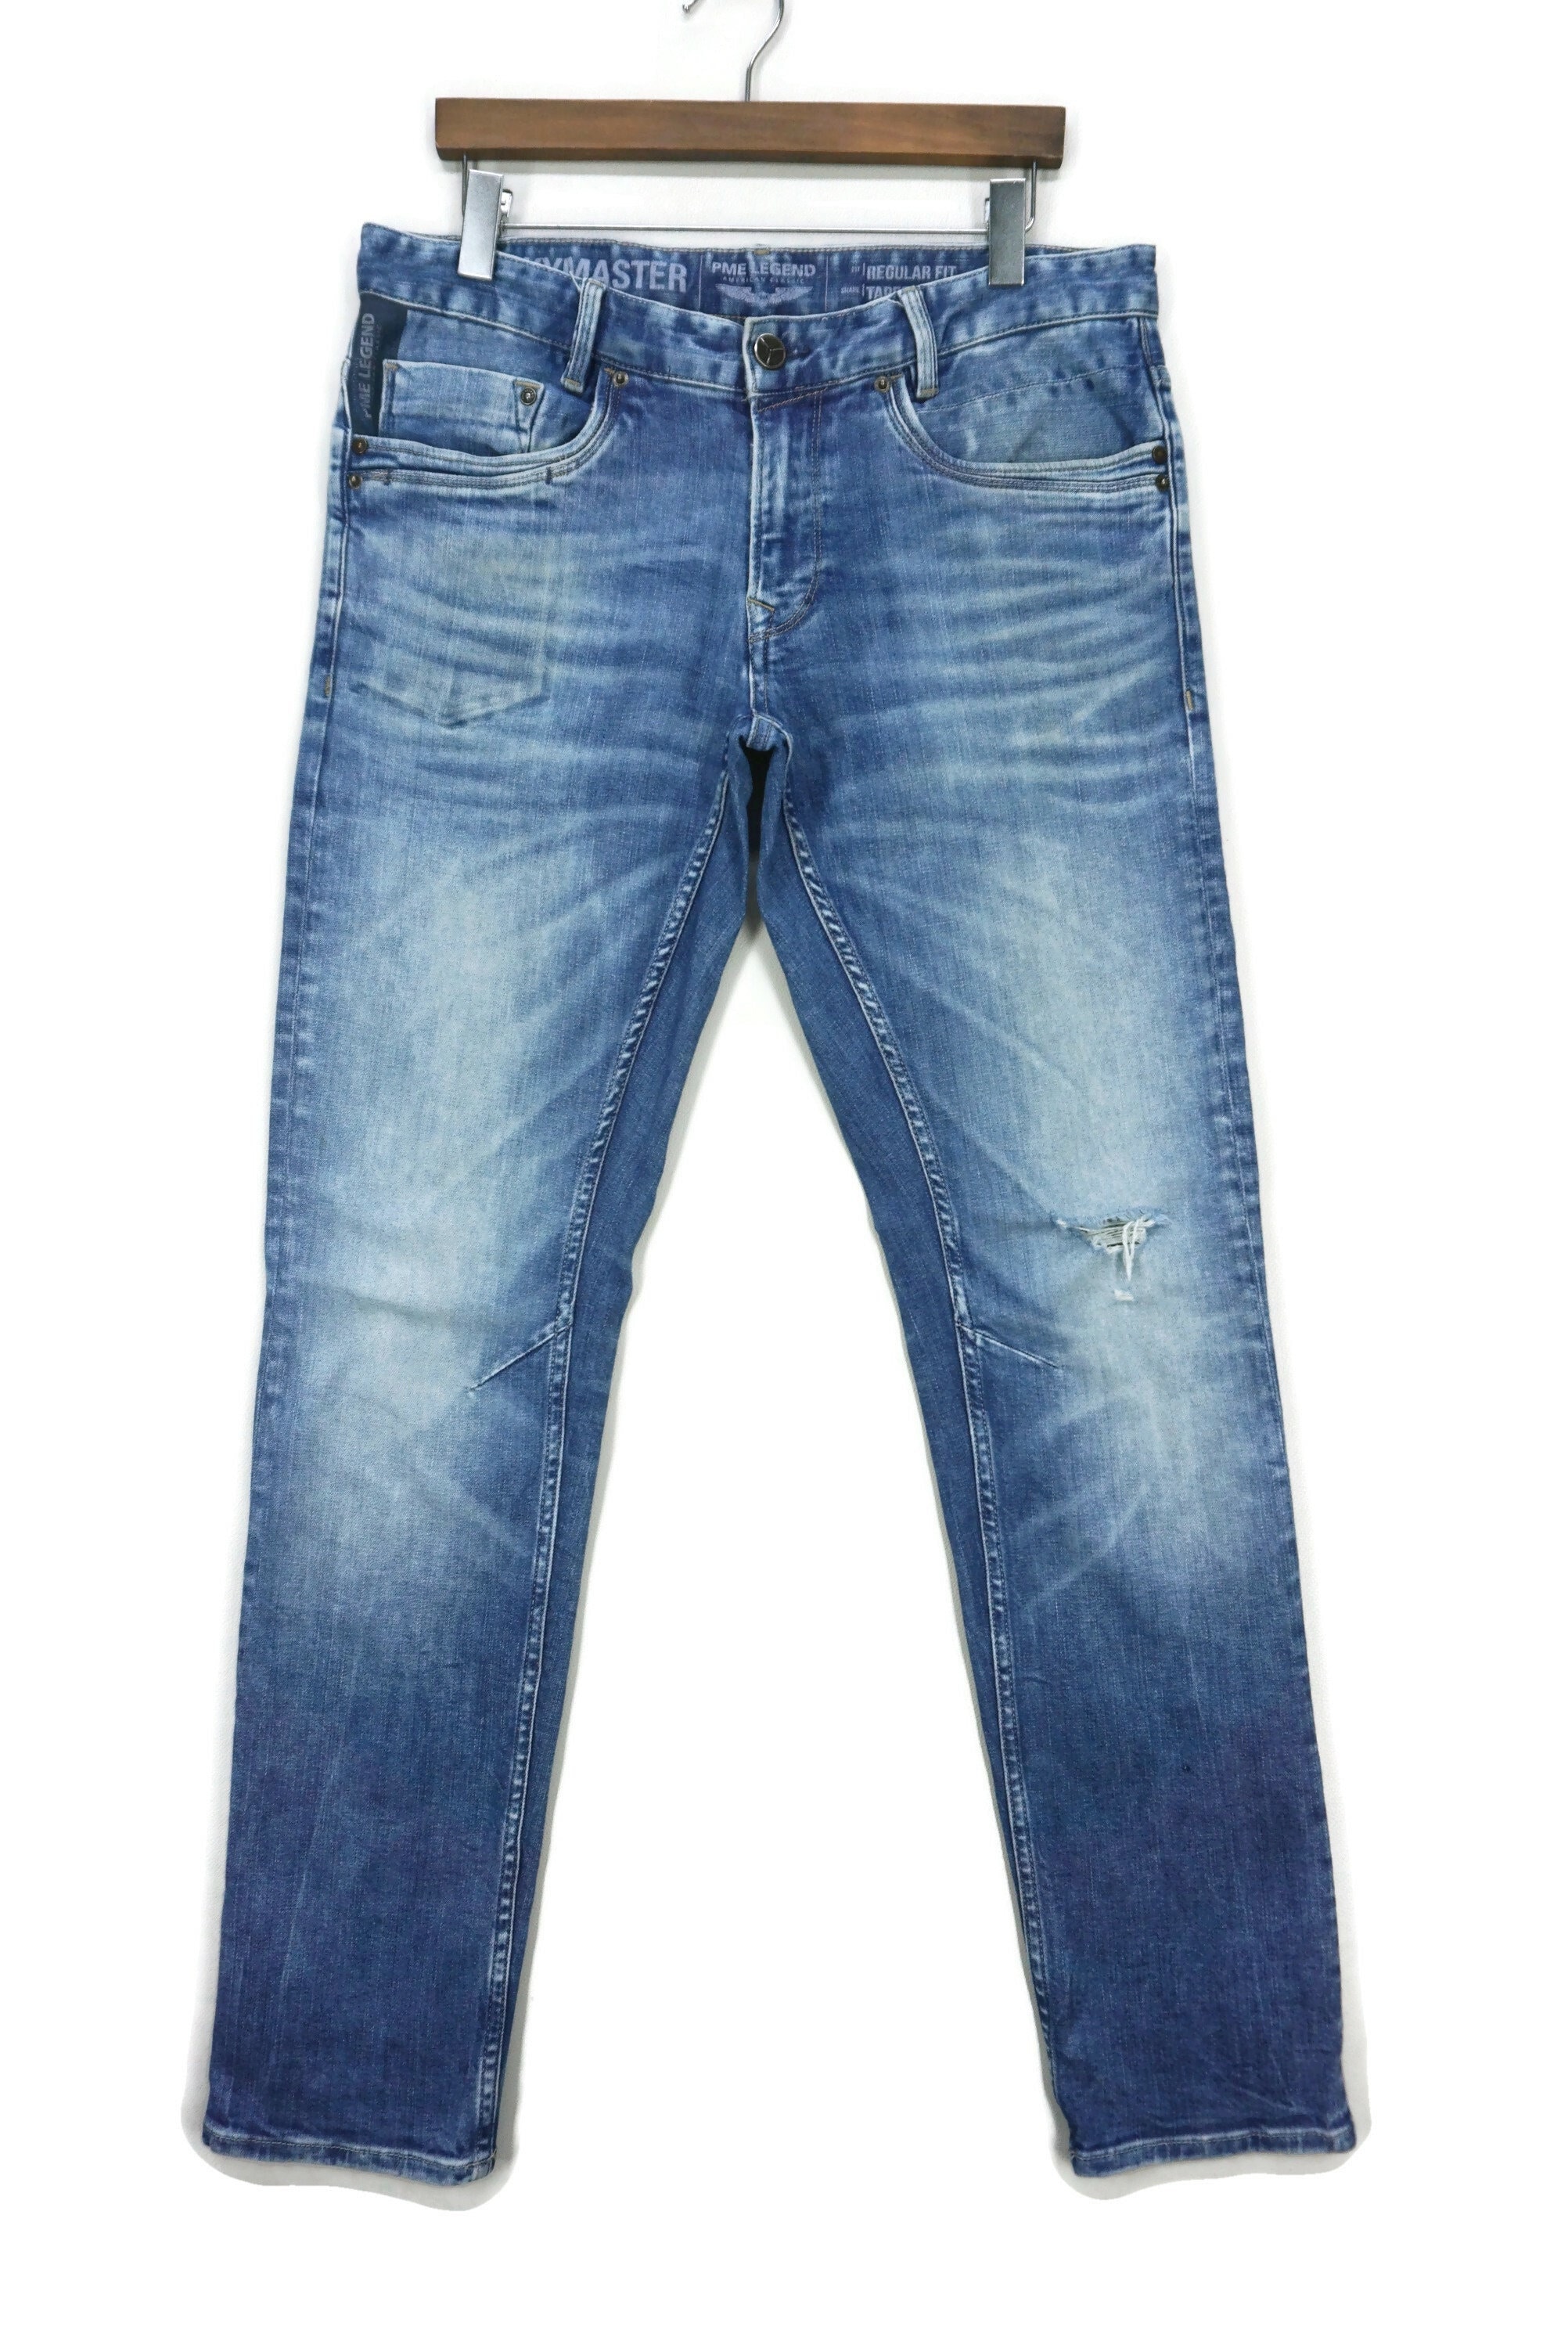 PME Legend Jeans Size 33 W36xl34.5 PME Master Regular Fit - Etsy